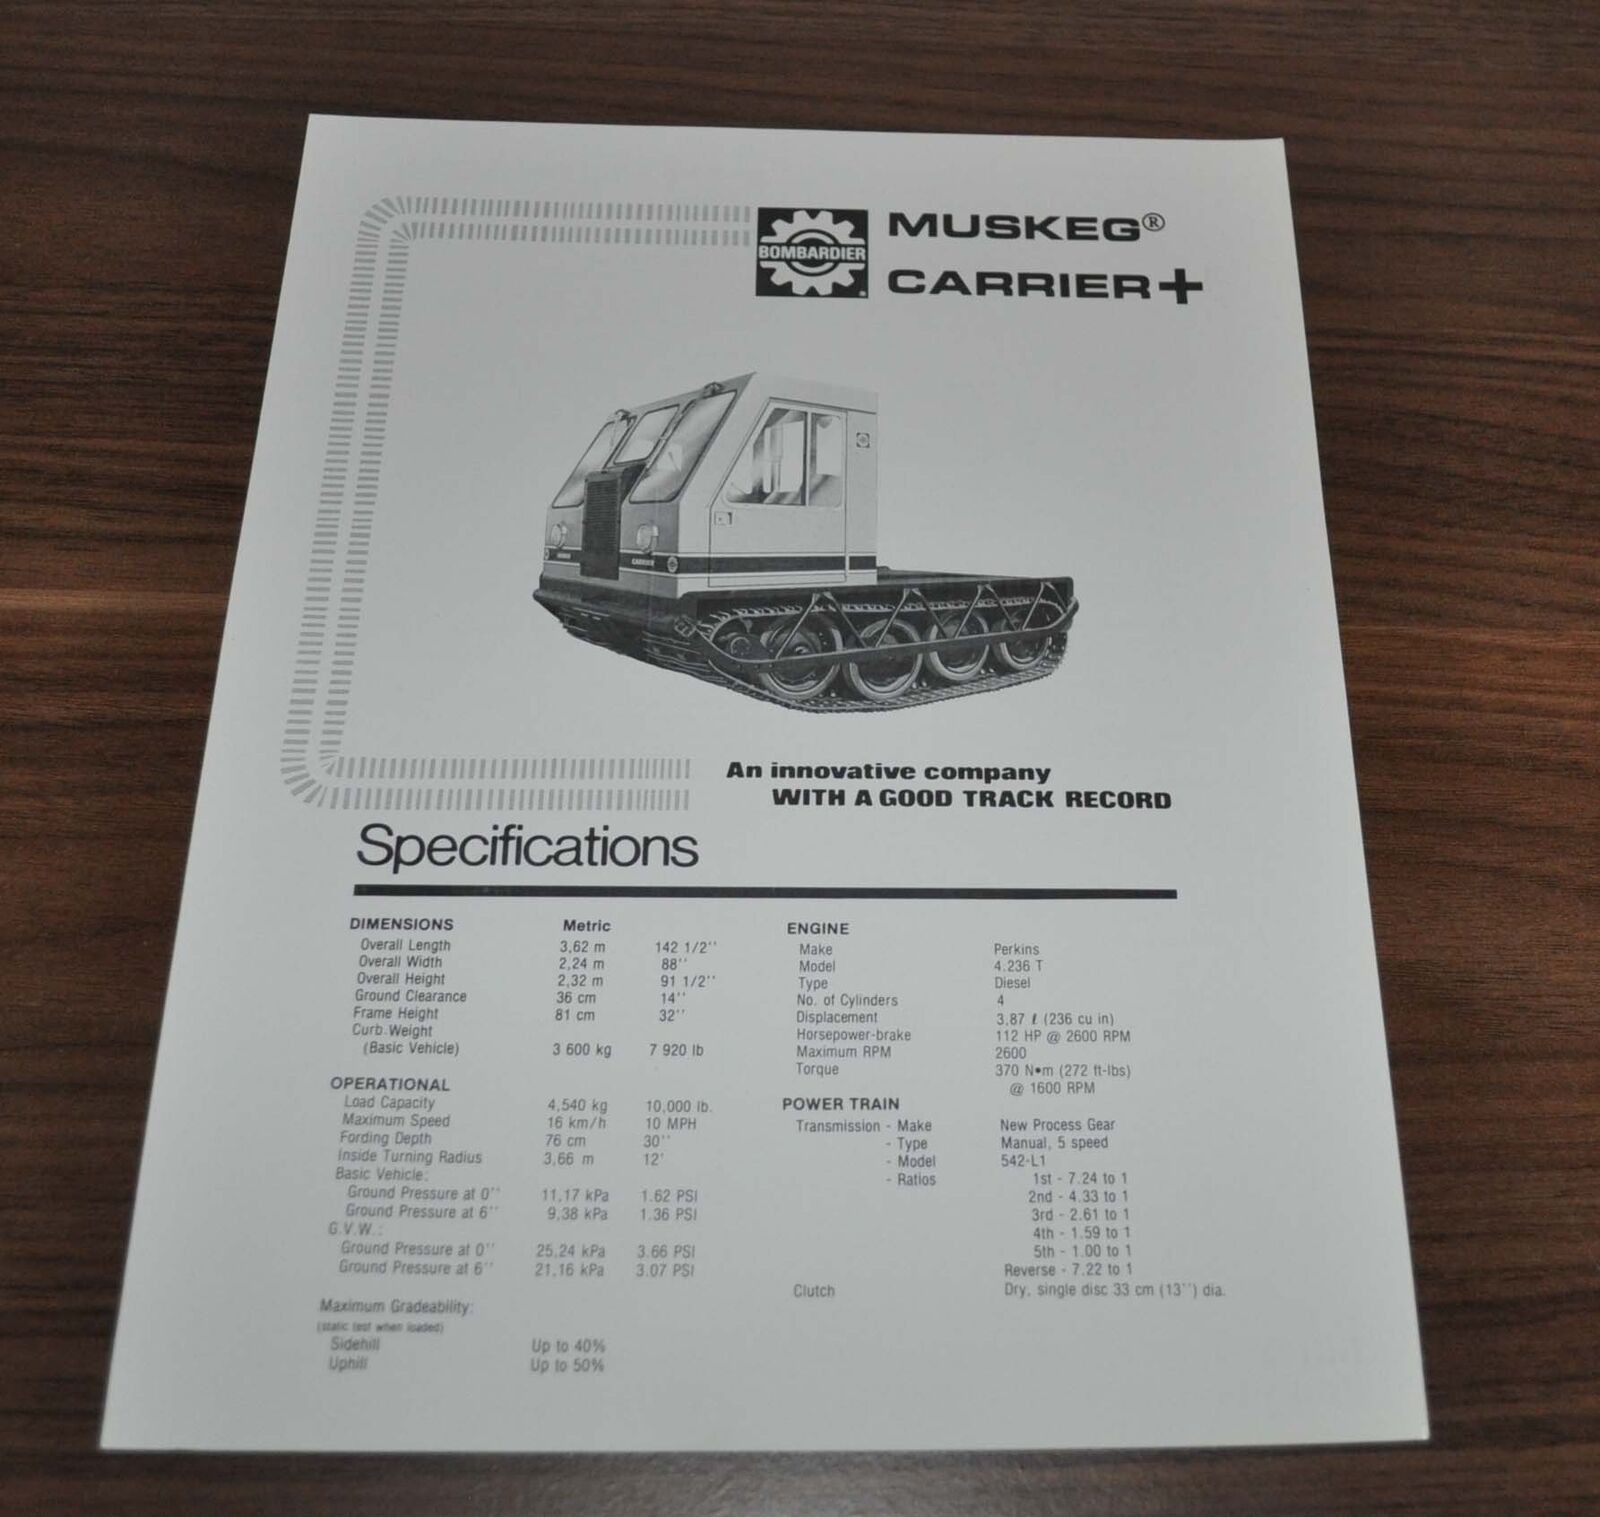 1987 Bombardier Muskeg Carrier + Crawler All Terrain Vehicle Brochure Prospekt